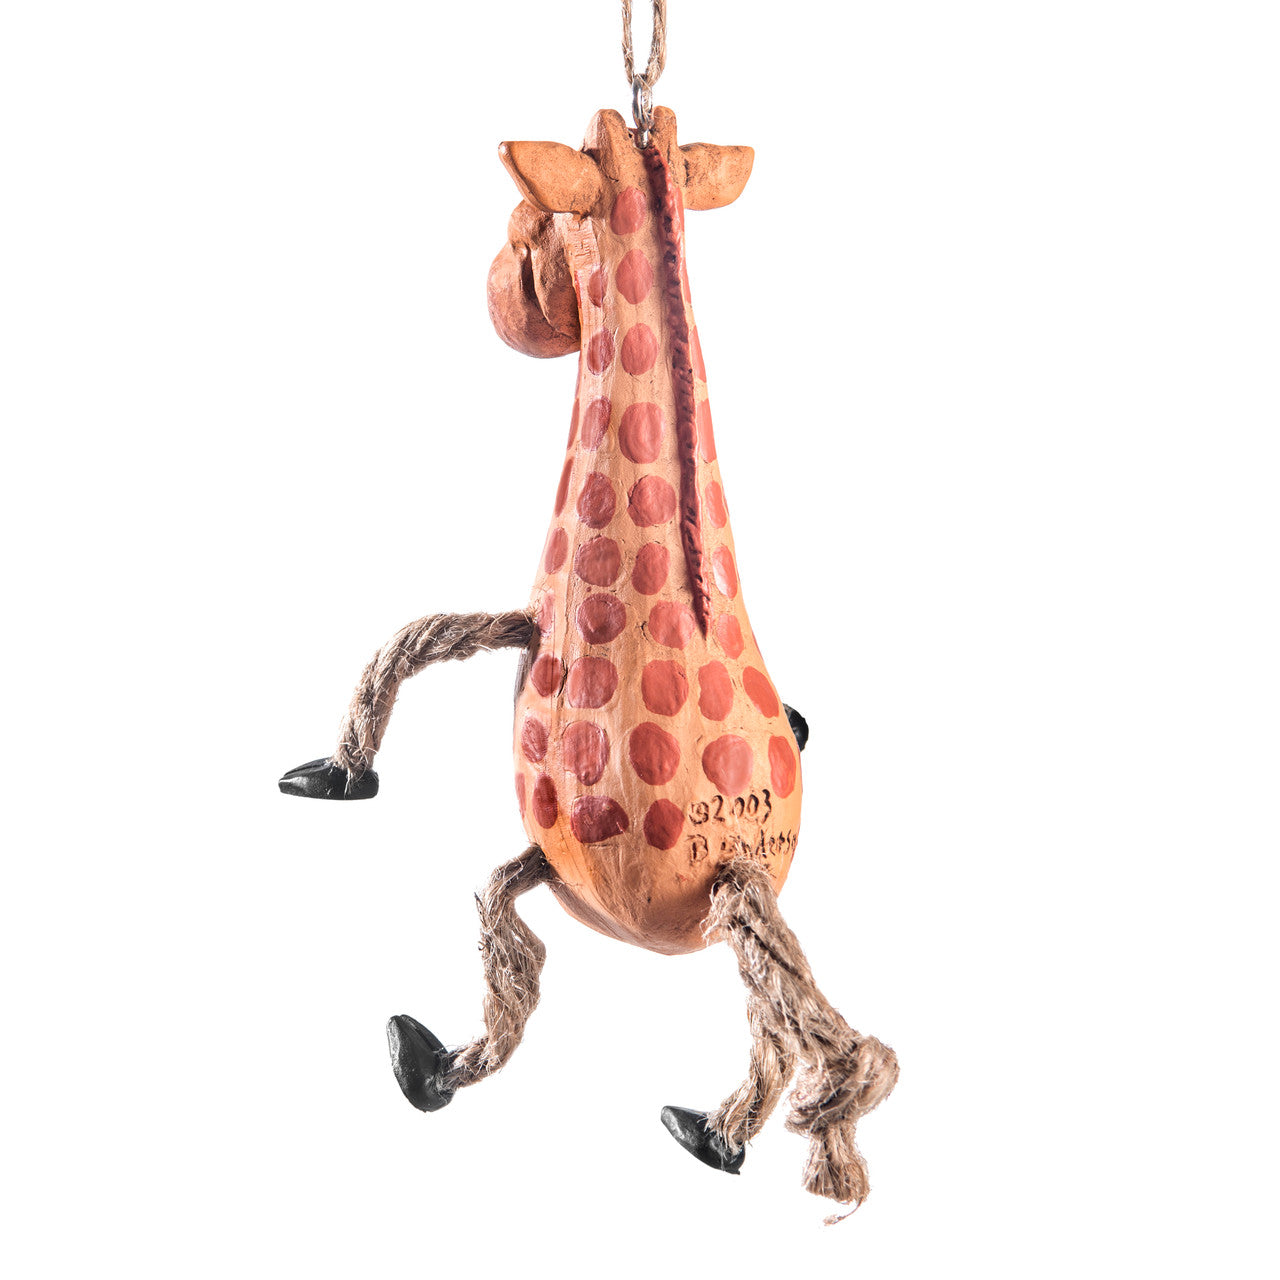 Bac 007 Giraffe Ornament Set of 3